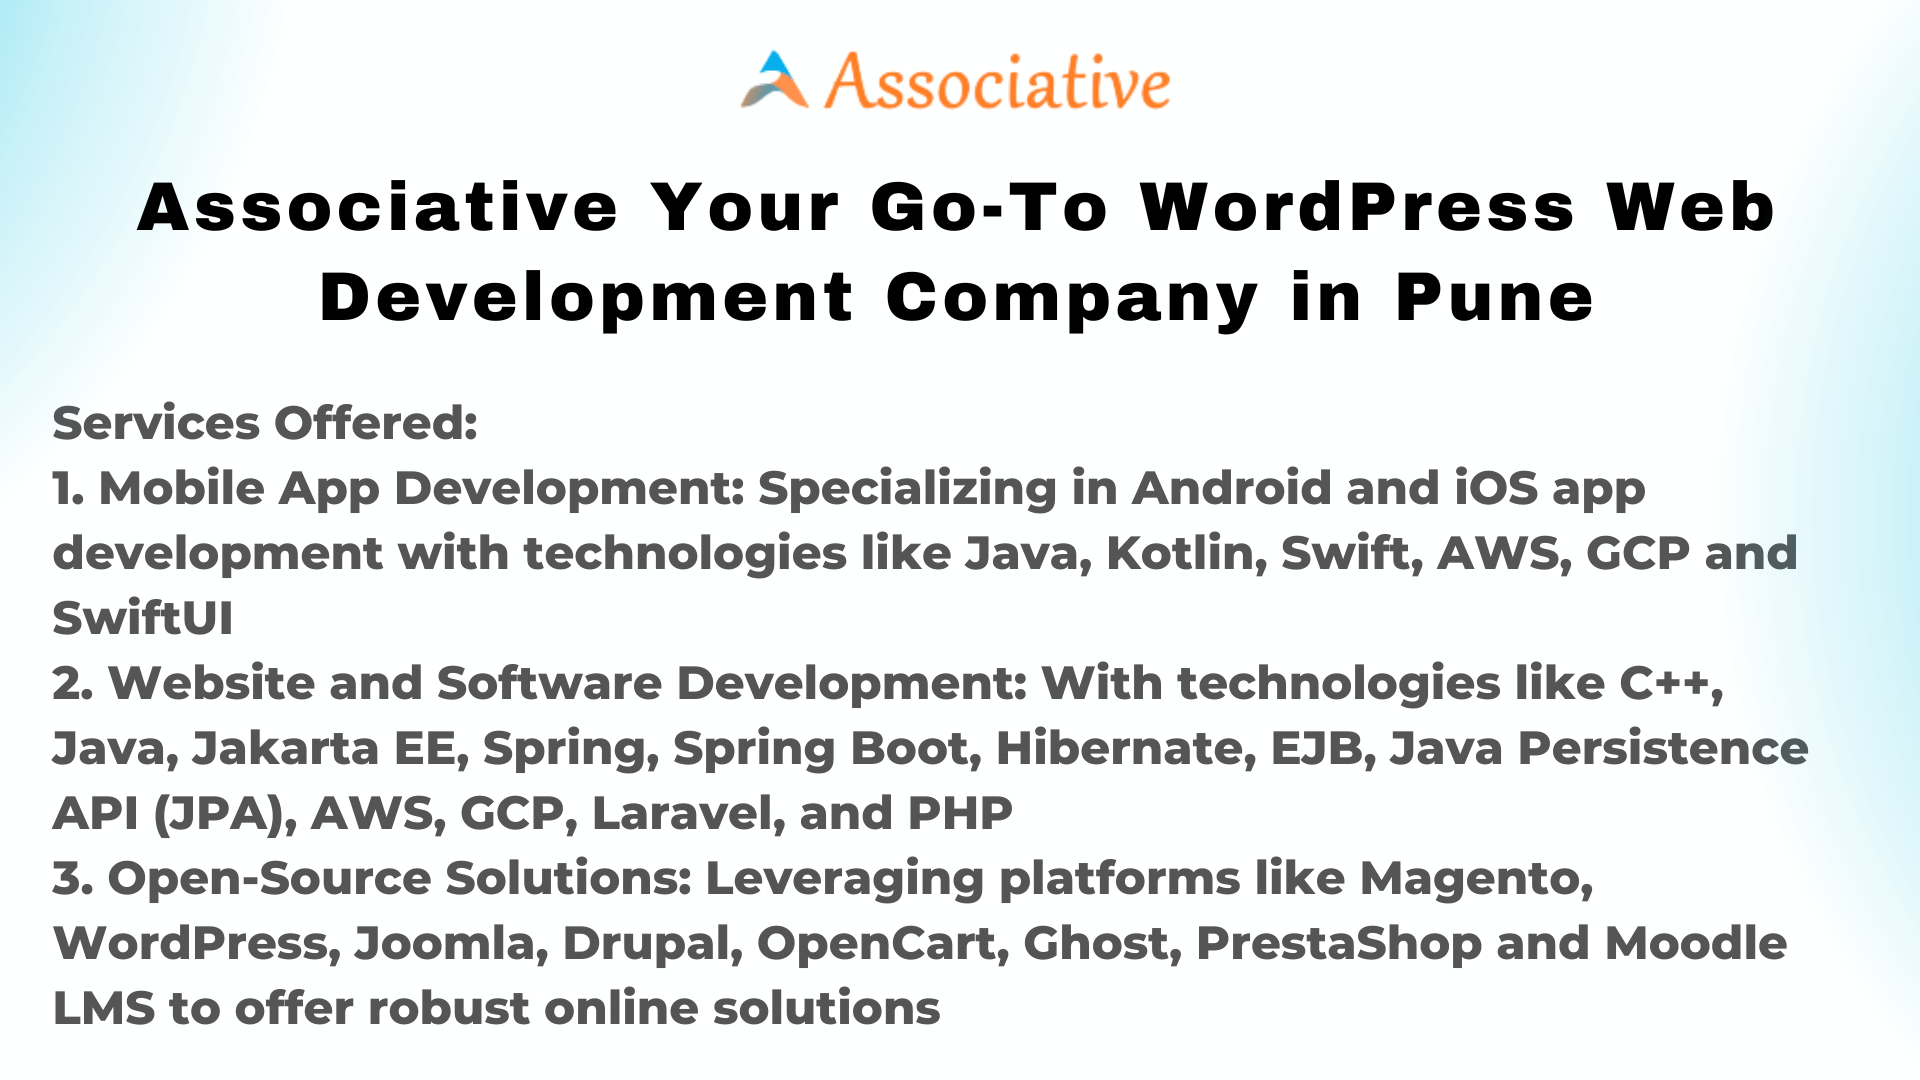 Associative Your Go-To WordPress Web Development Company in Pune